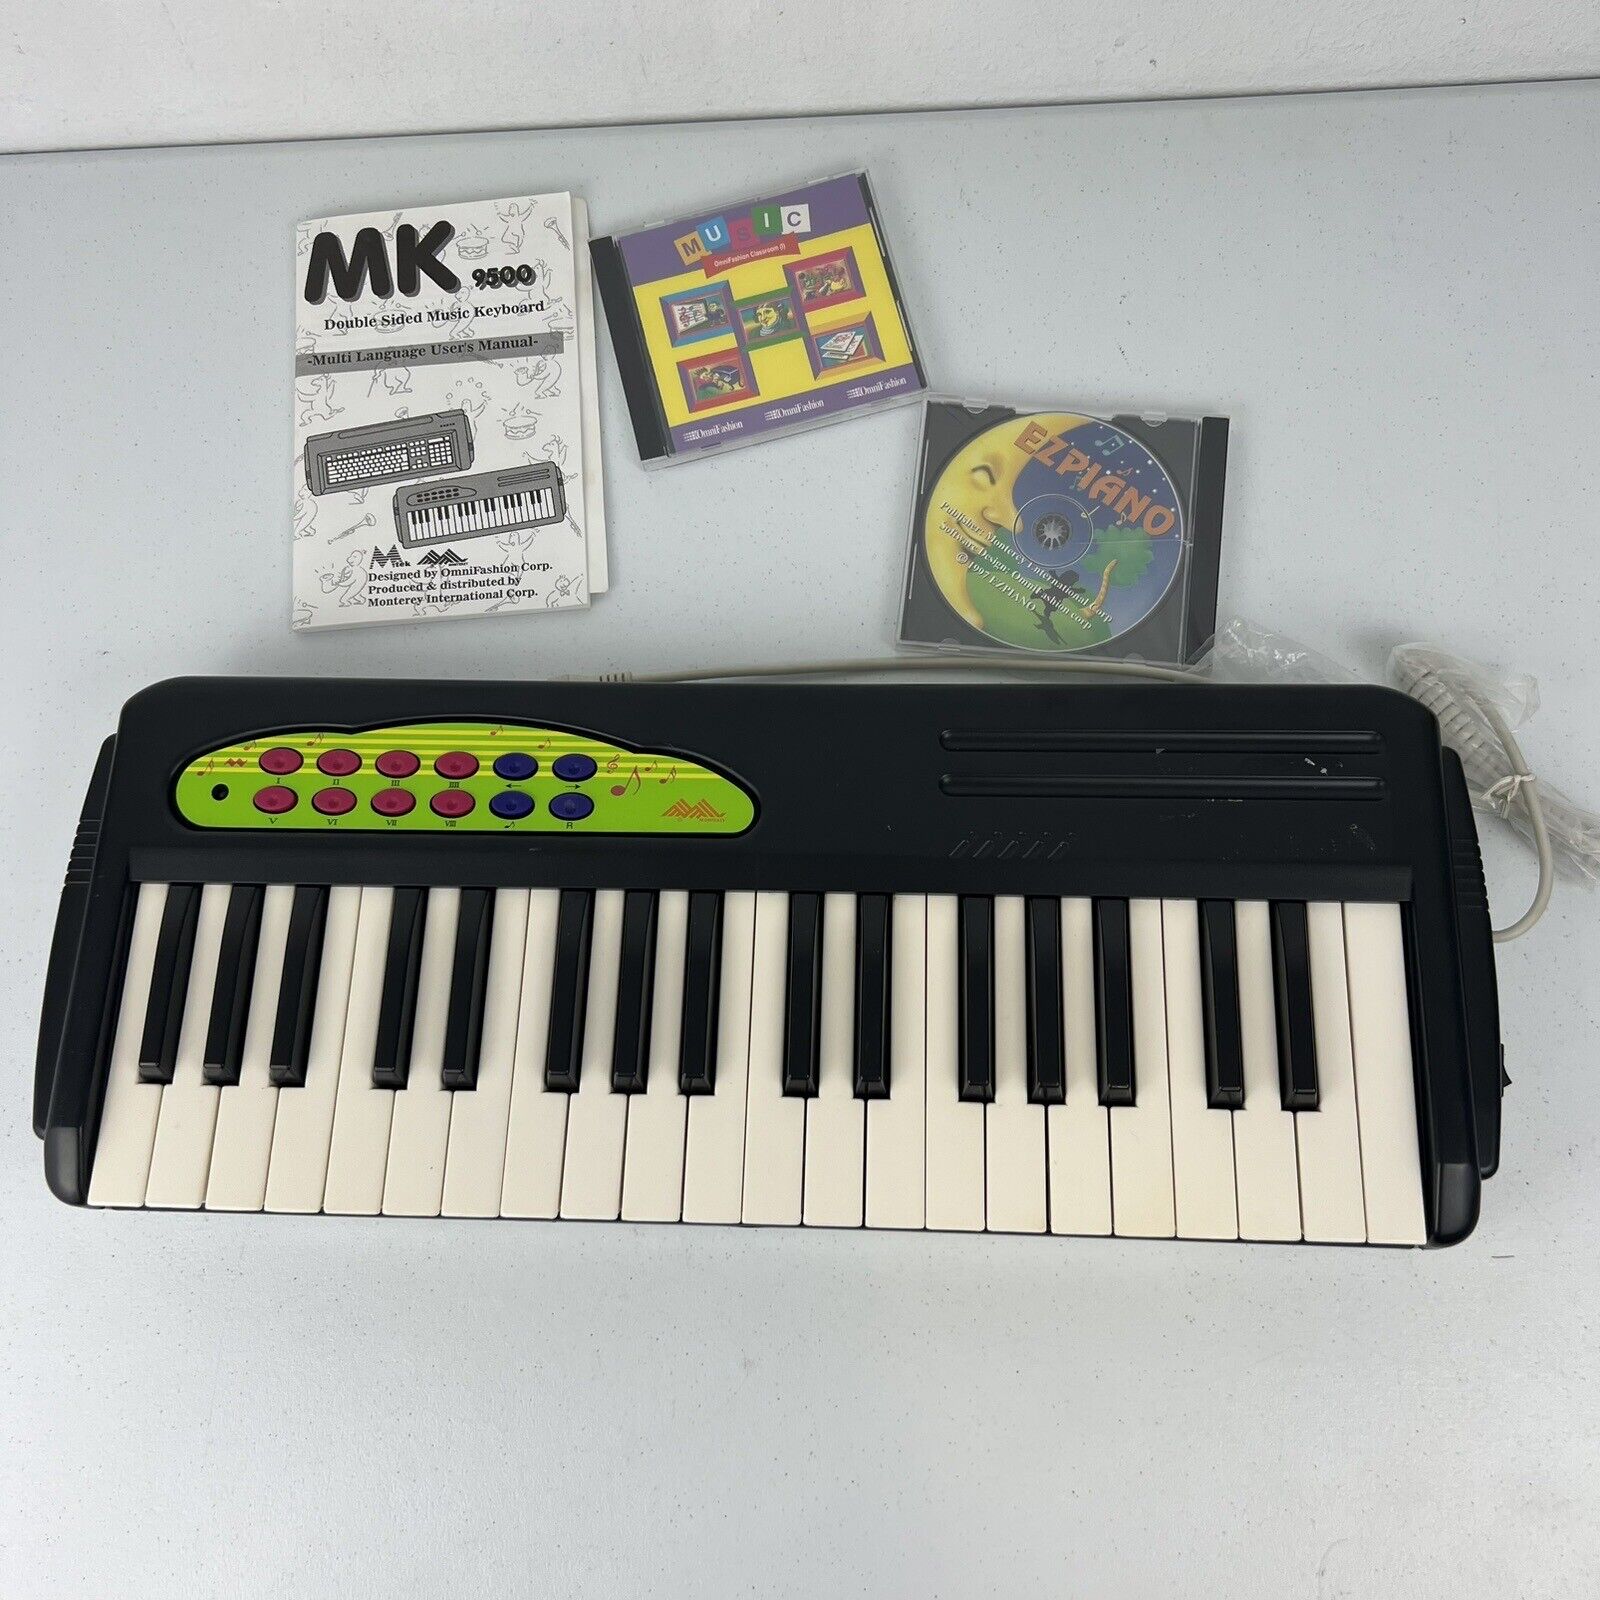 Super Rare Vintage Keyboard Piano - MONTEREY MK 9500 - RETROCOMPUTER